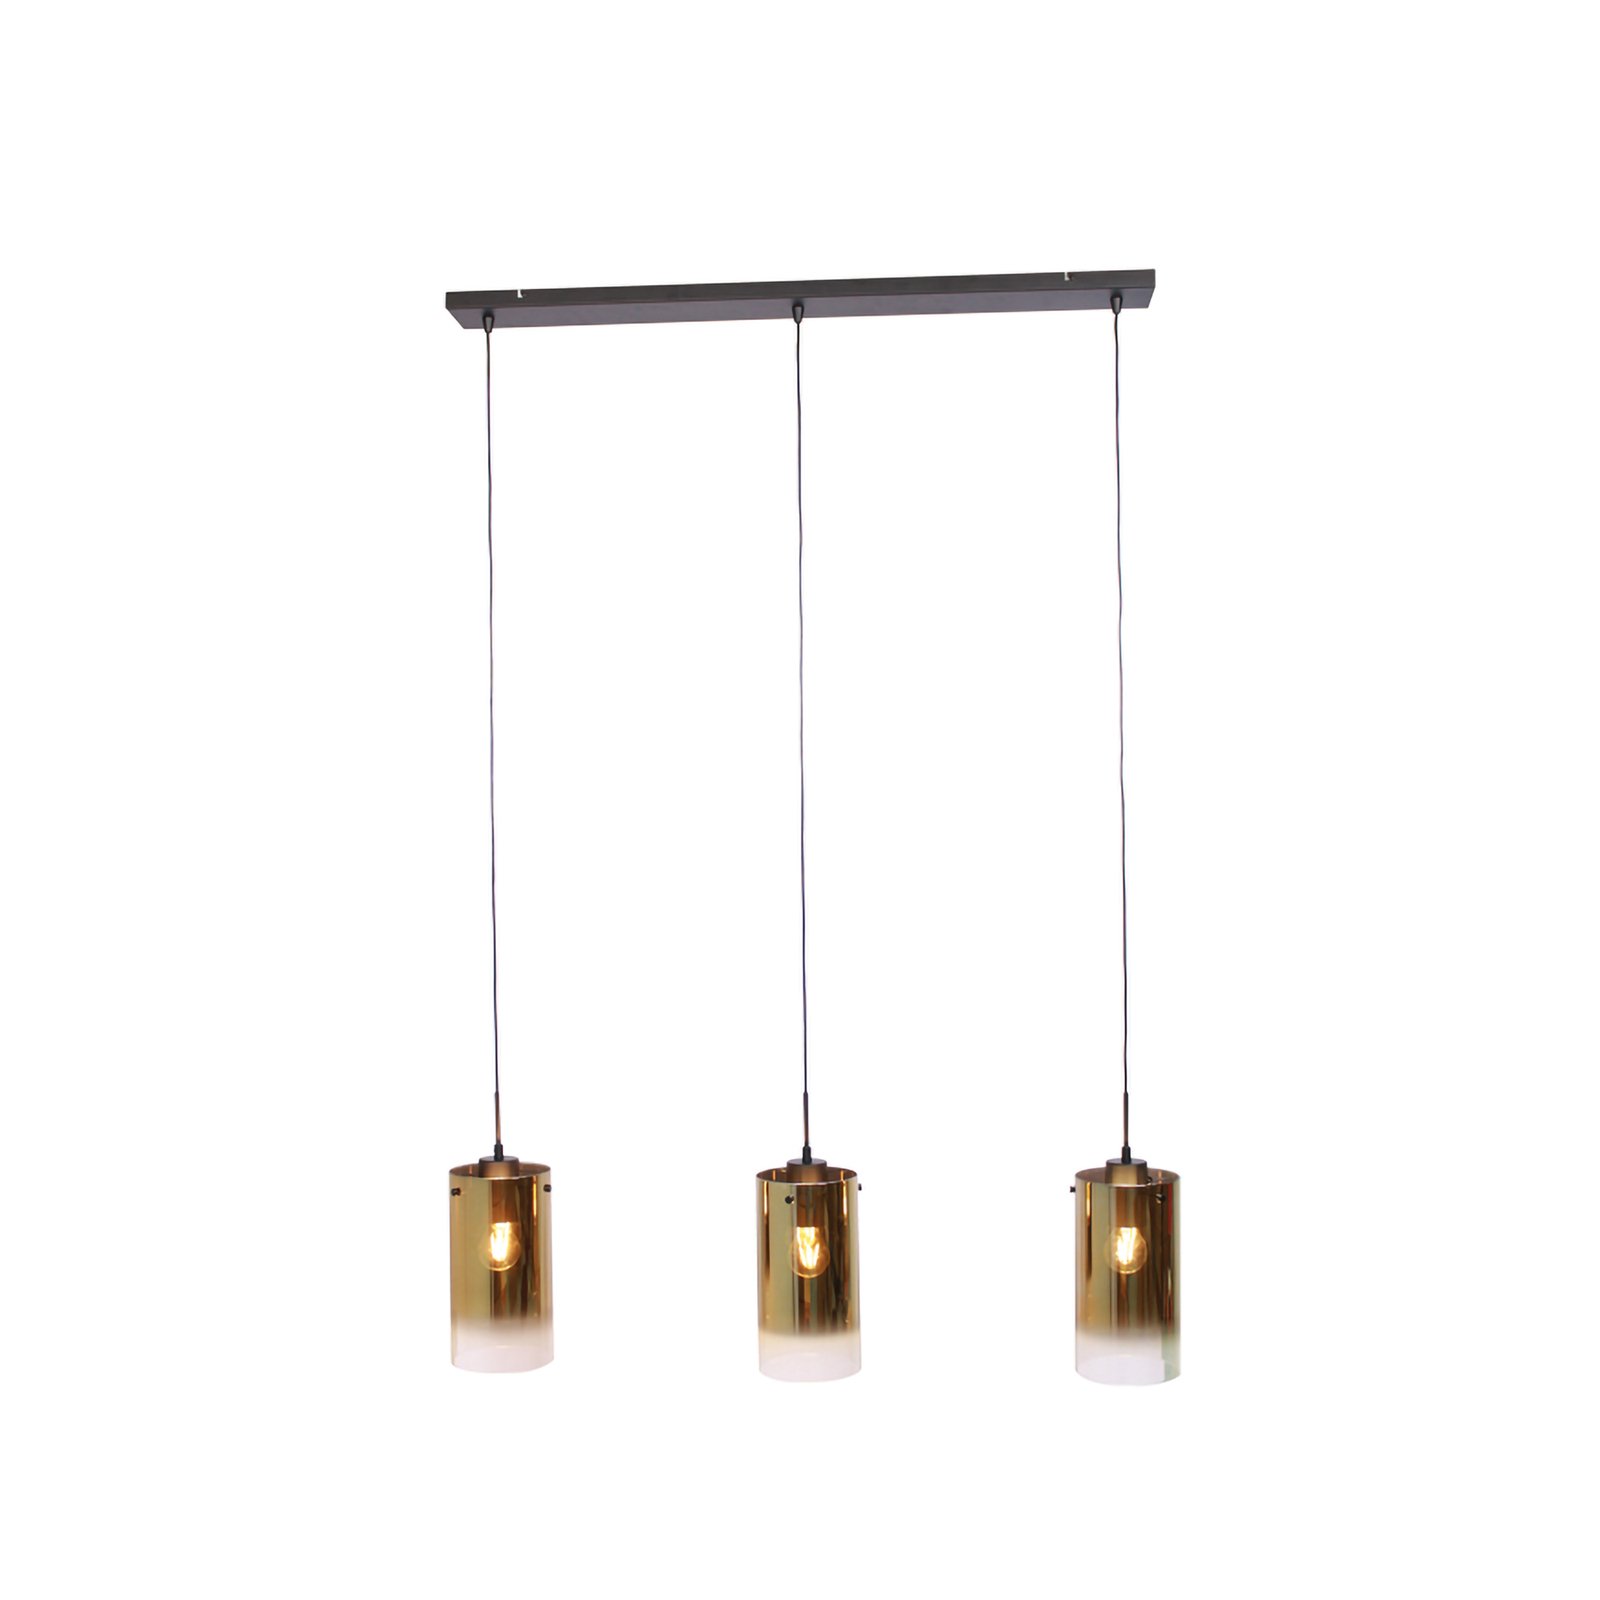 Ventotto hanglamp, zwart/goud, lengte 105 cm, 3-lamps glas